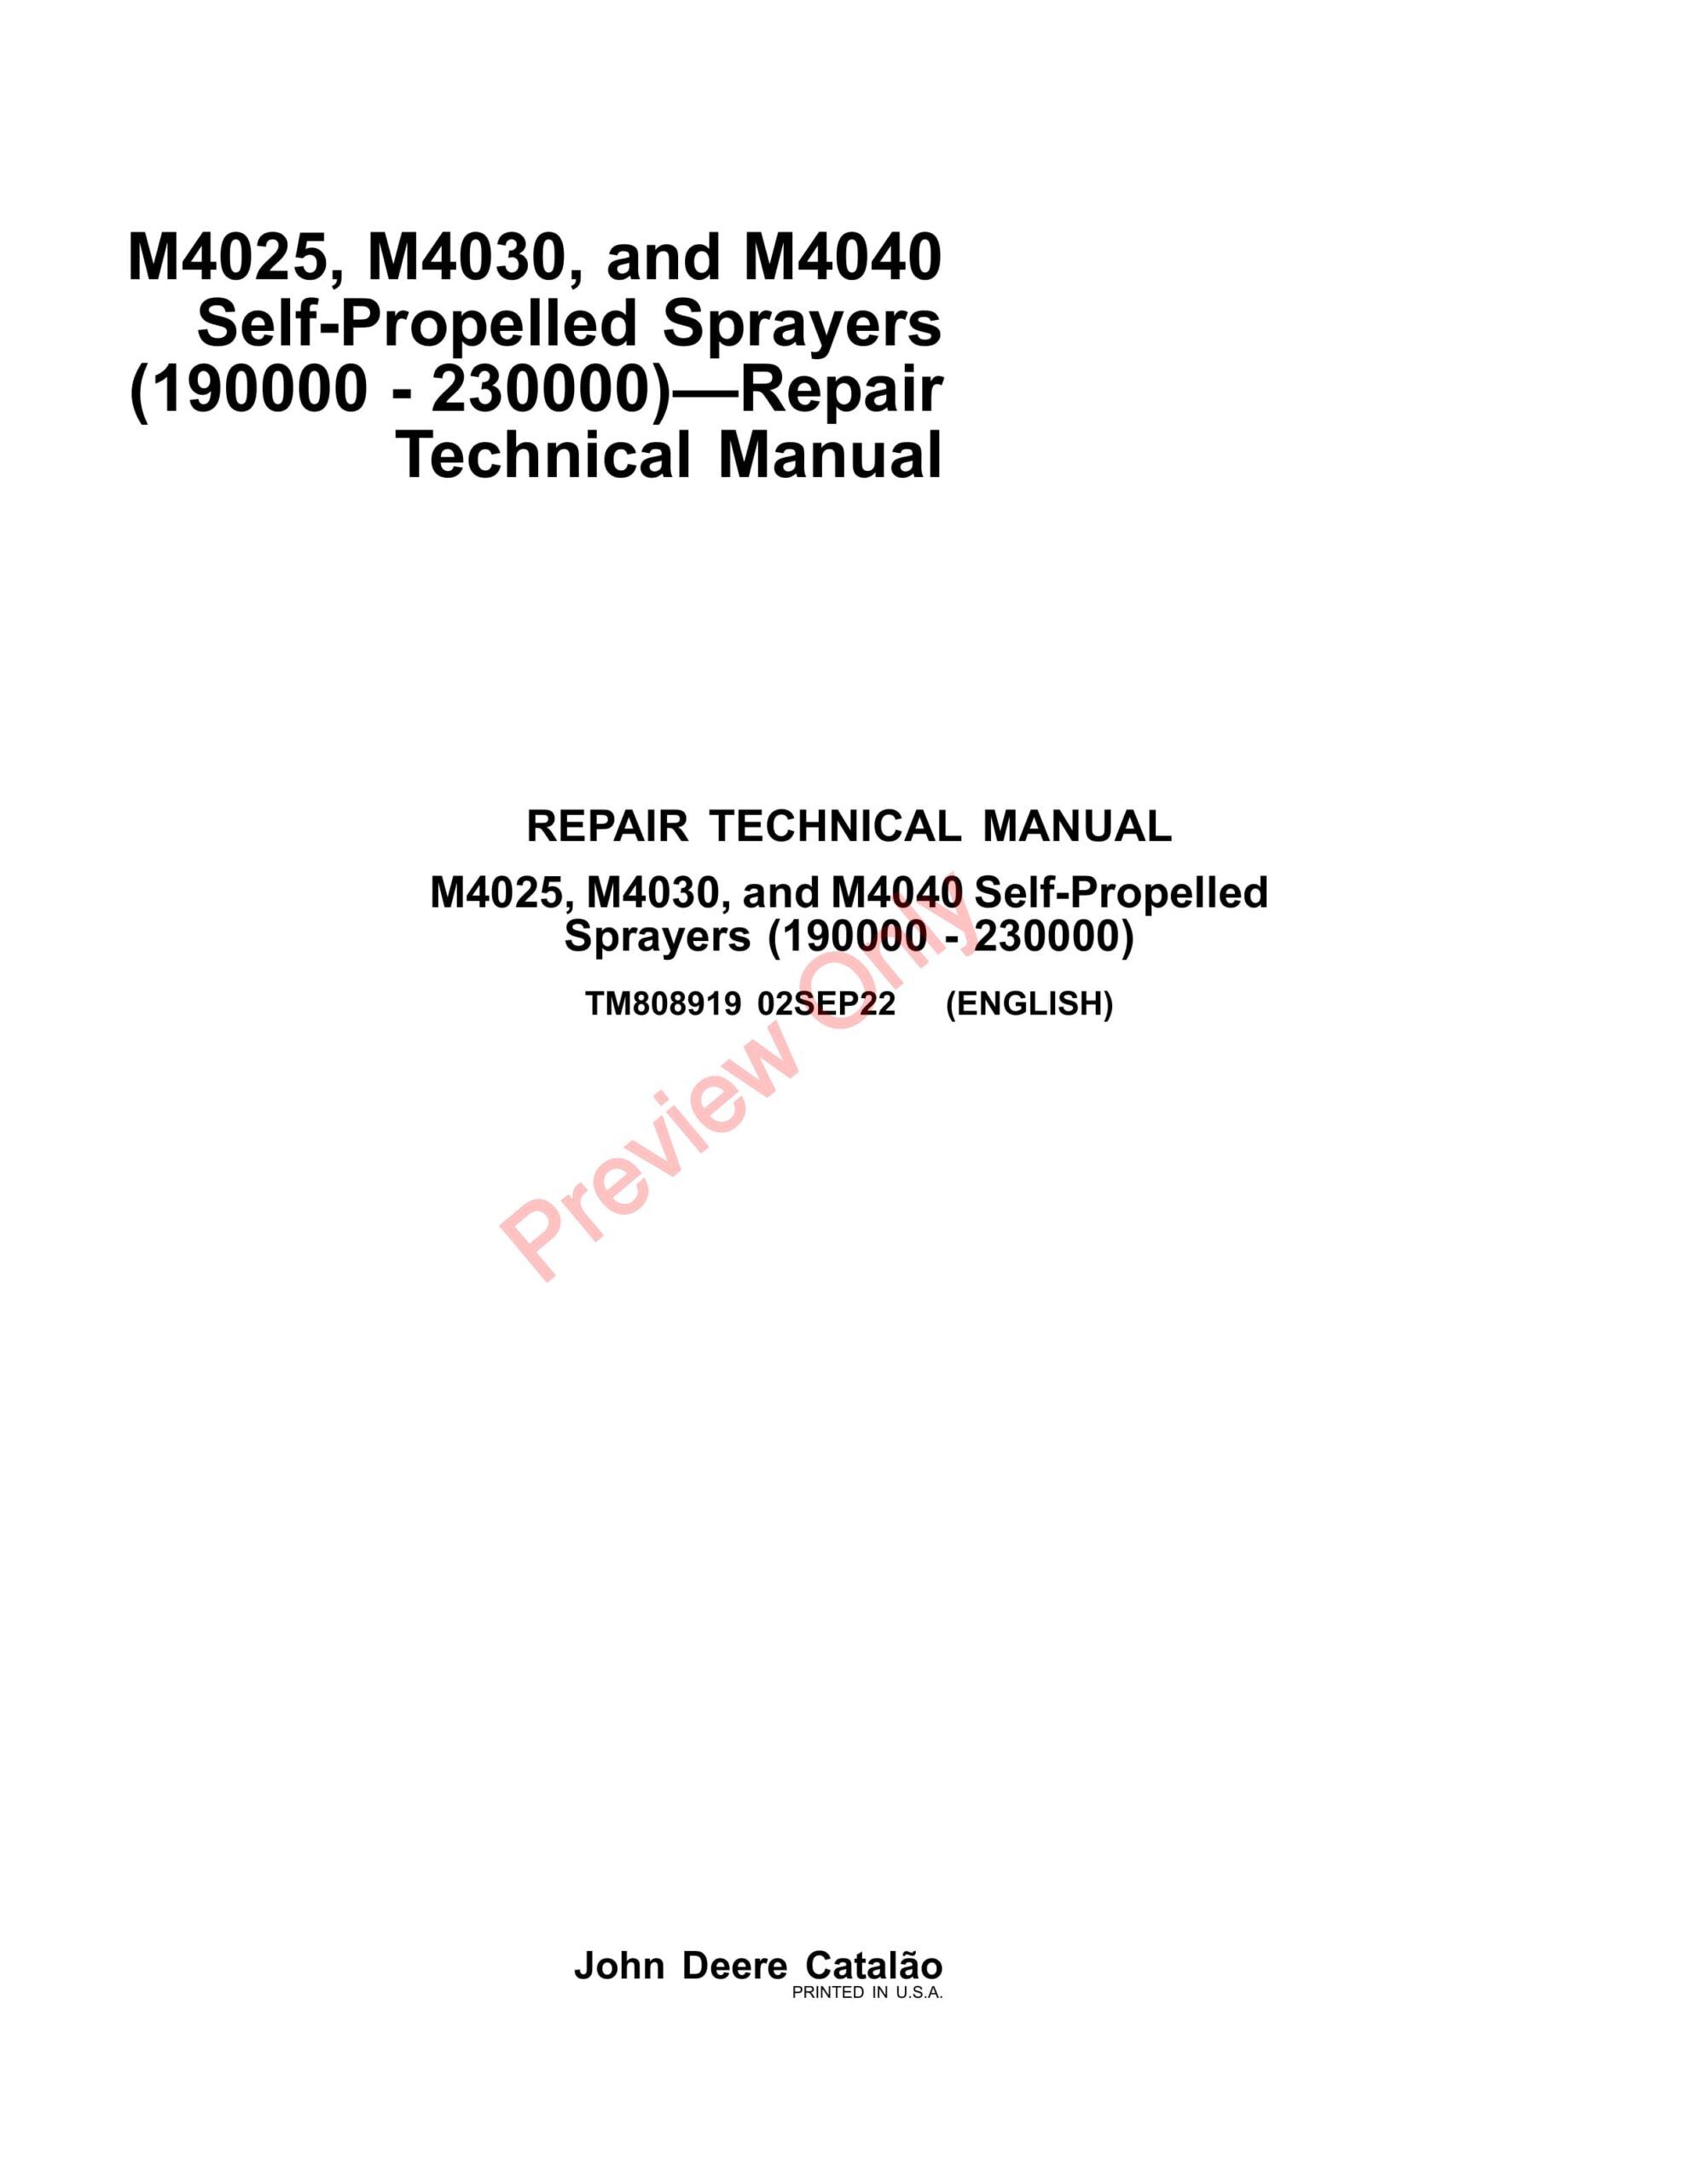 John Deere M4025, M4030, and M4040 Self-Propelled Sprayers (190000-) Repair Technical Manual TM808919 02SEP22-1